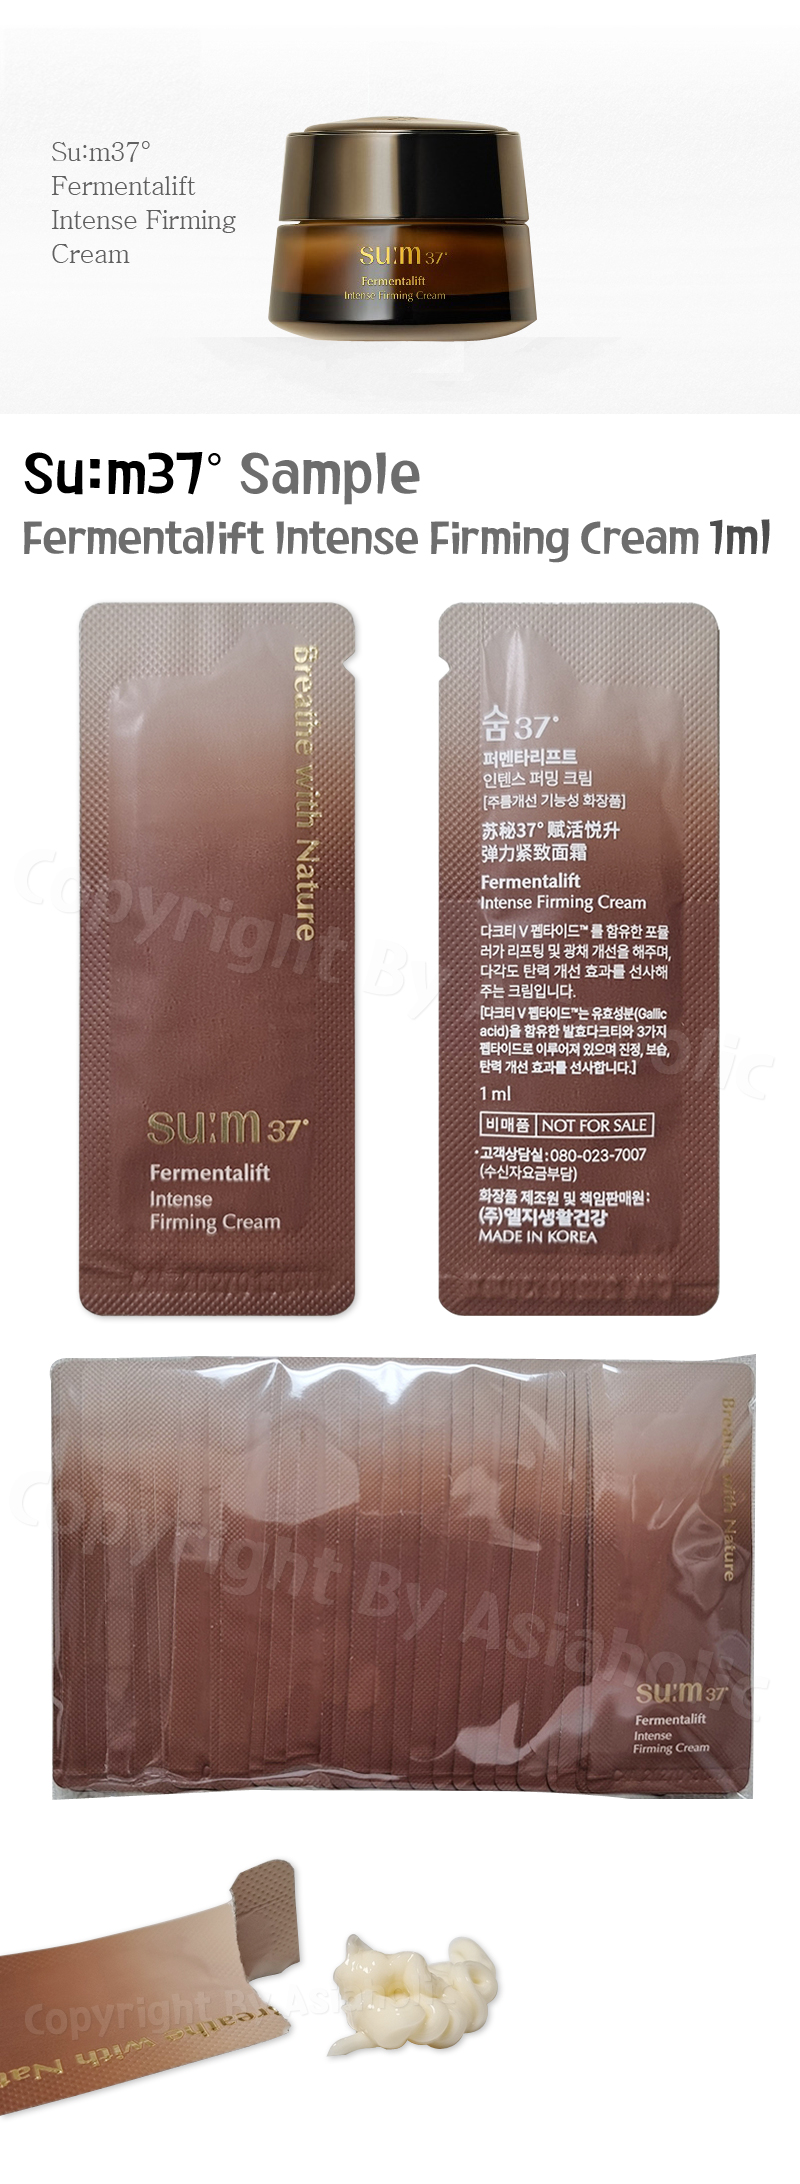 SU:M37 Fermentalift Intense Firming Cream 1ml x 100pcs (100ml) Sample Sum37 Newest Version